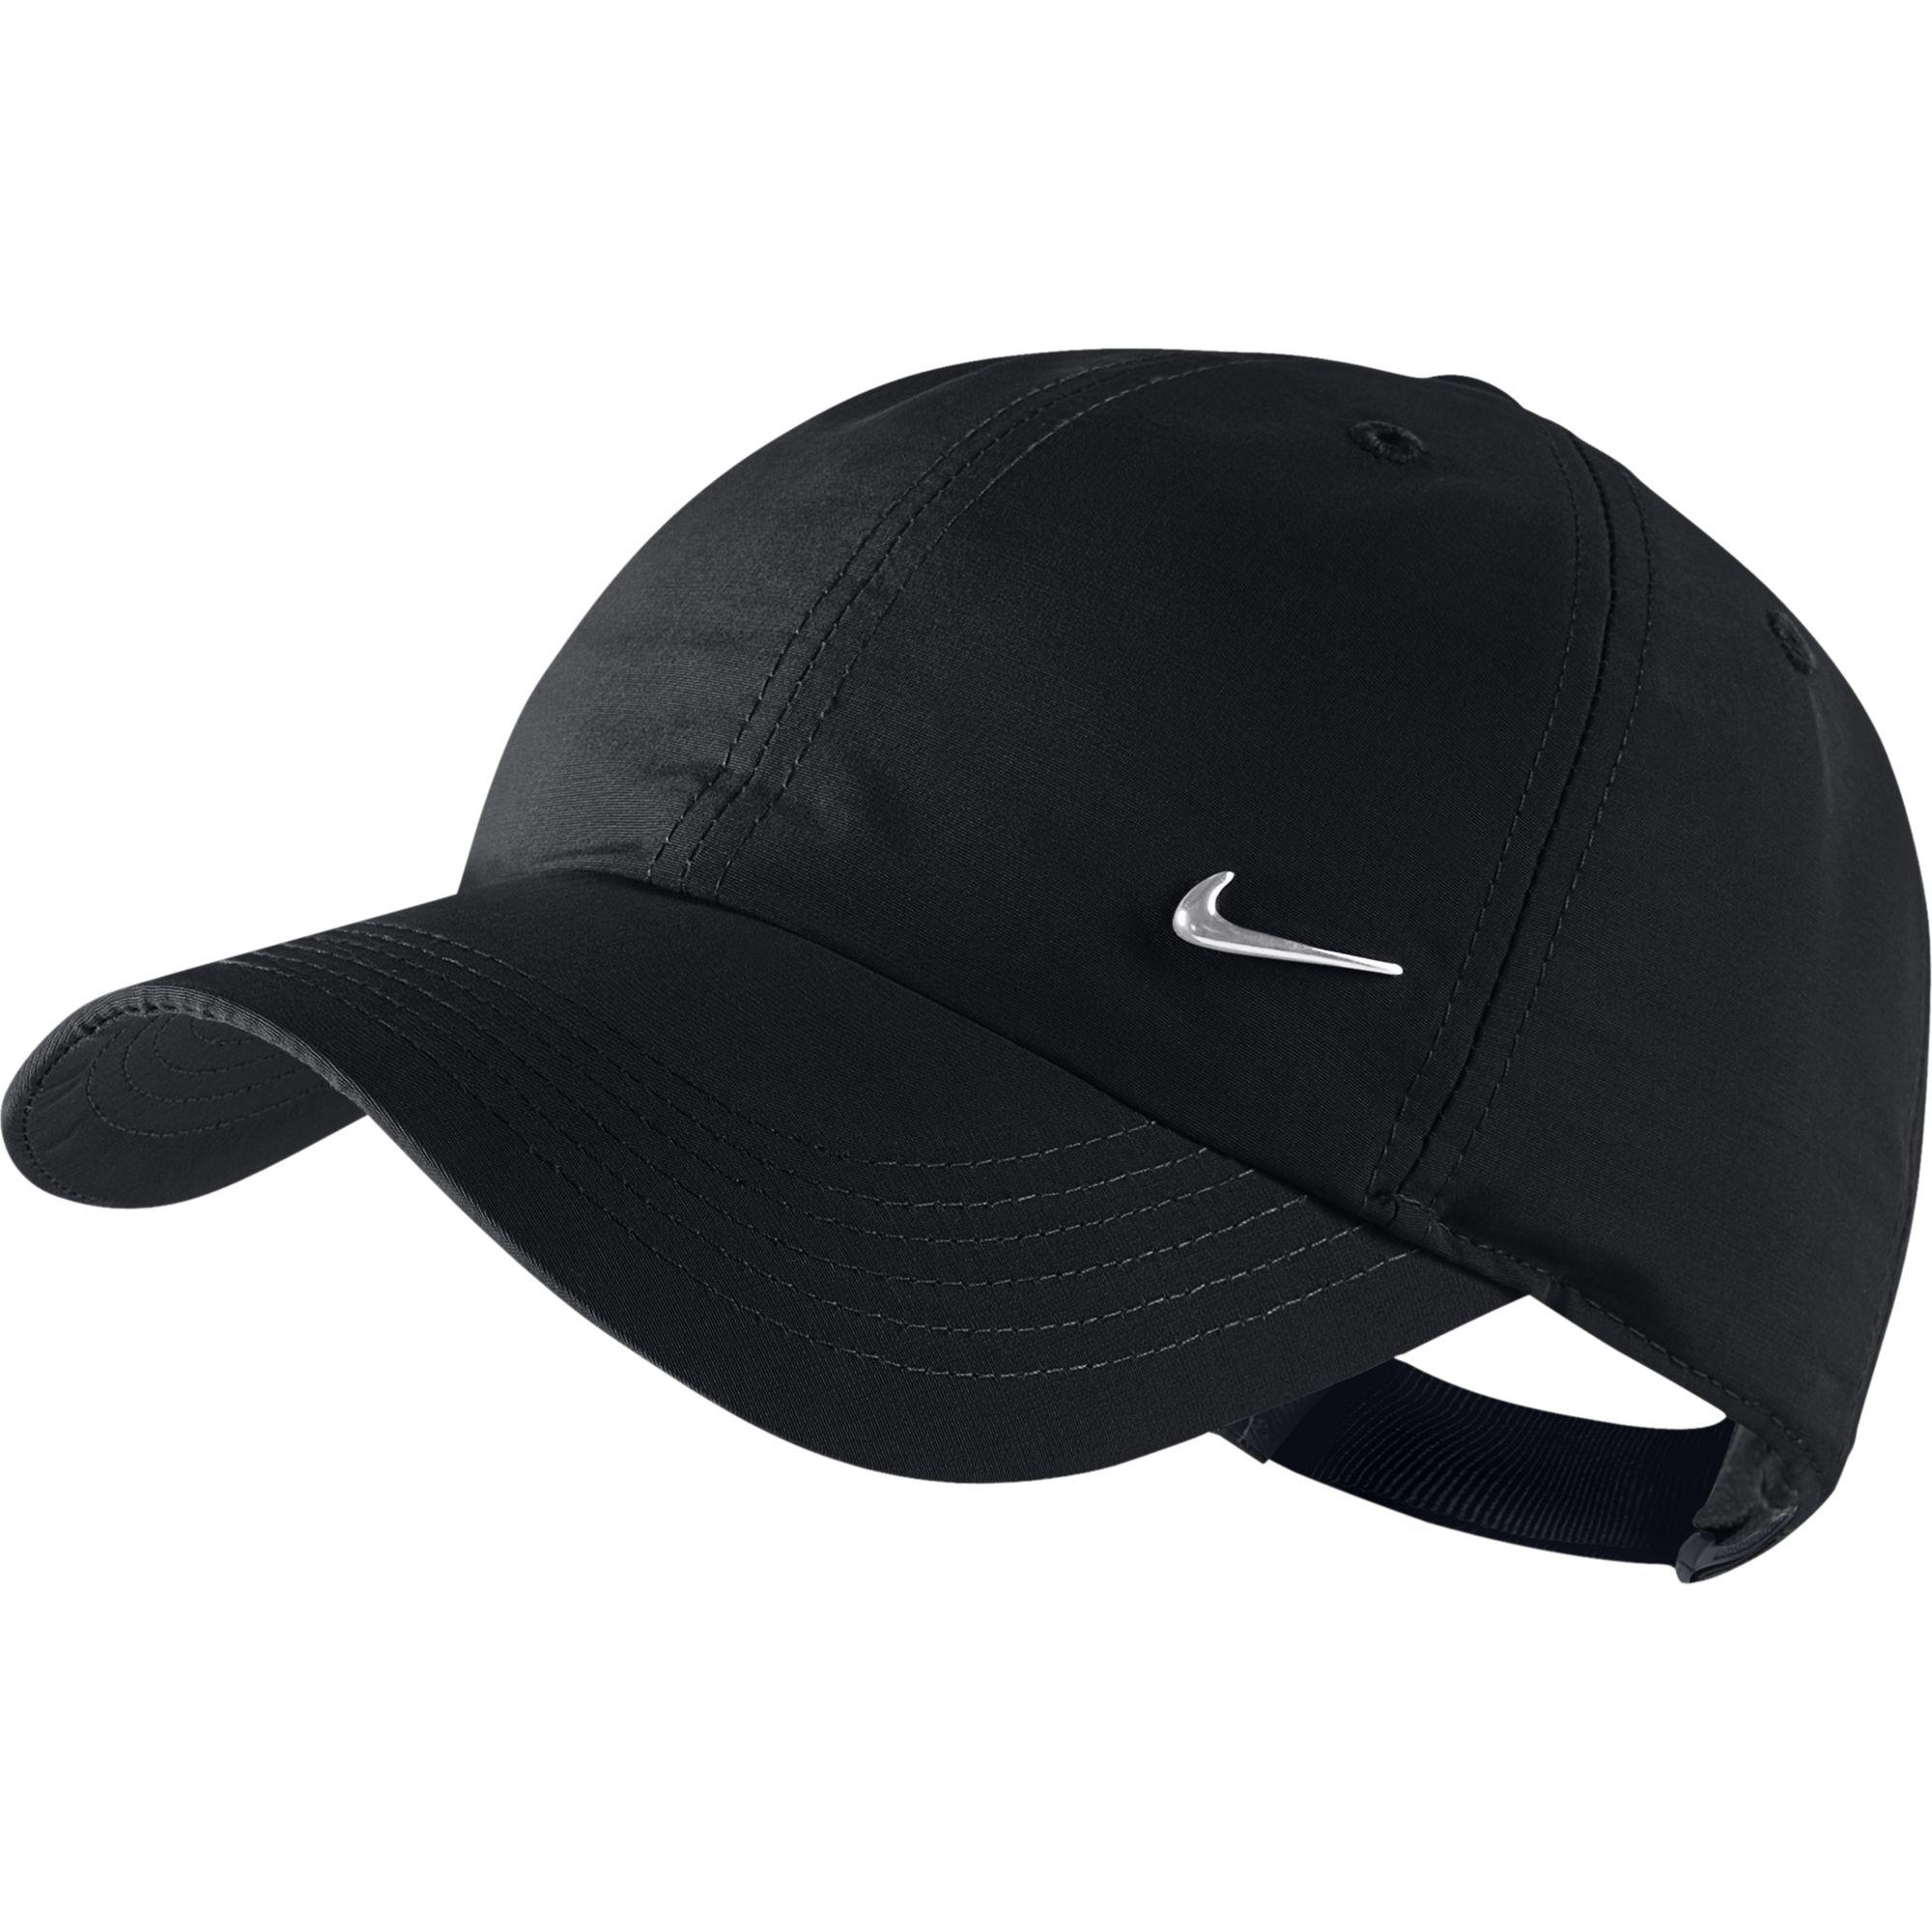 Nike Kids Swoosh H86 Adjustable Cap - Black/Silver - Tennisnuts.com